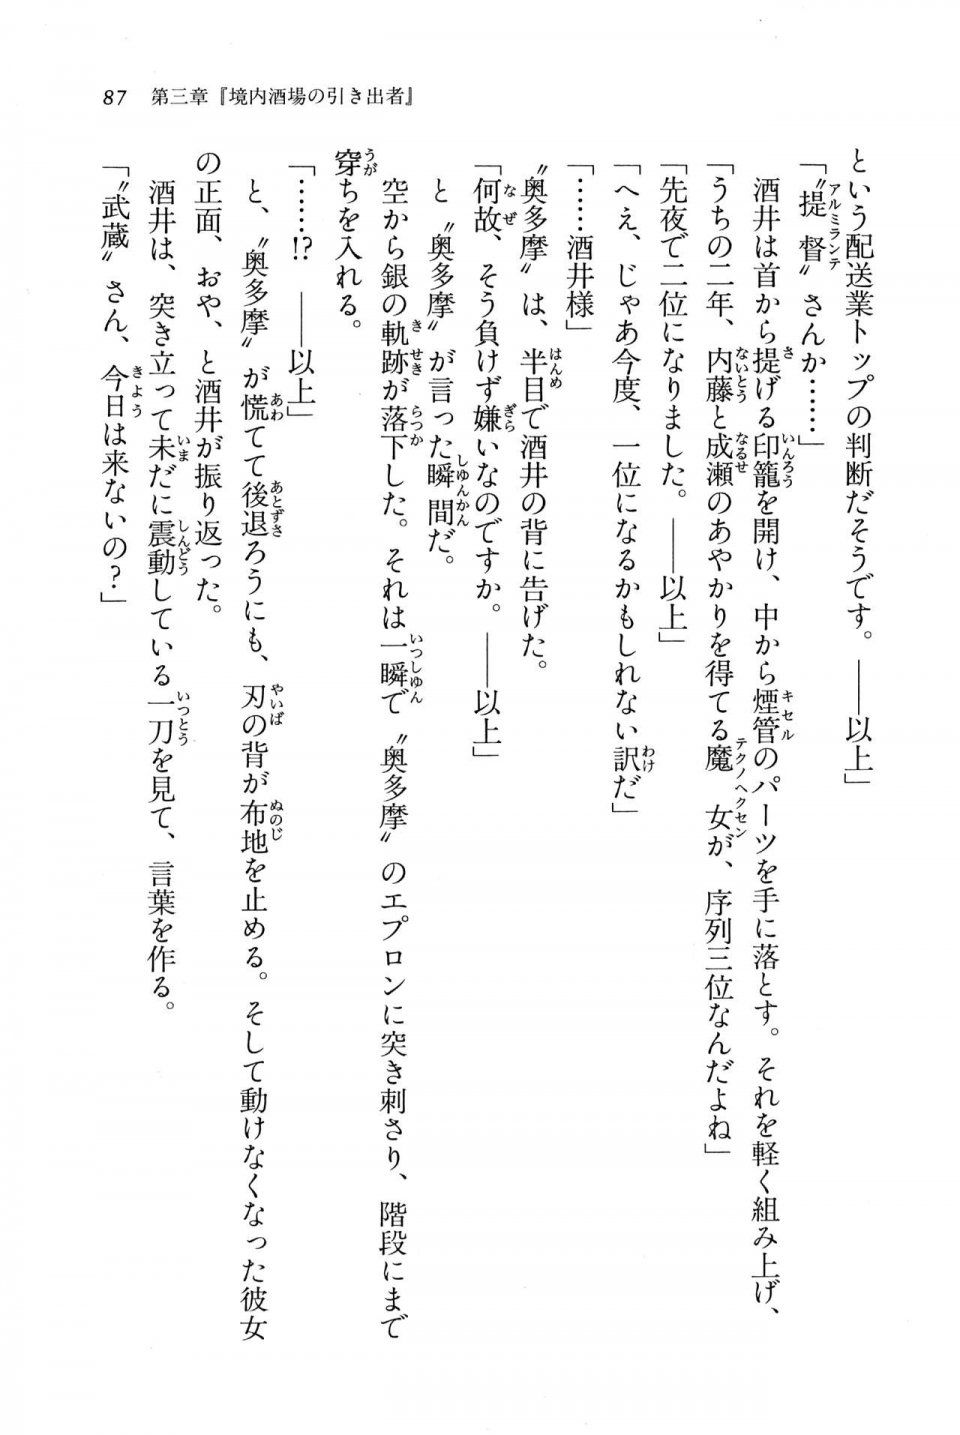 Kyoukai Senjou no Horizon BD Special Mininovel Vol 7(4A) - Photo #91